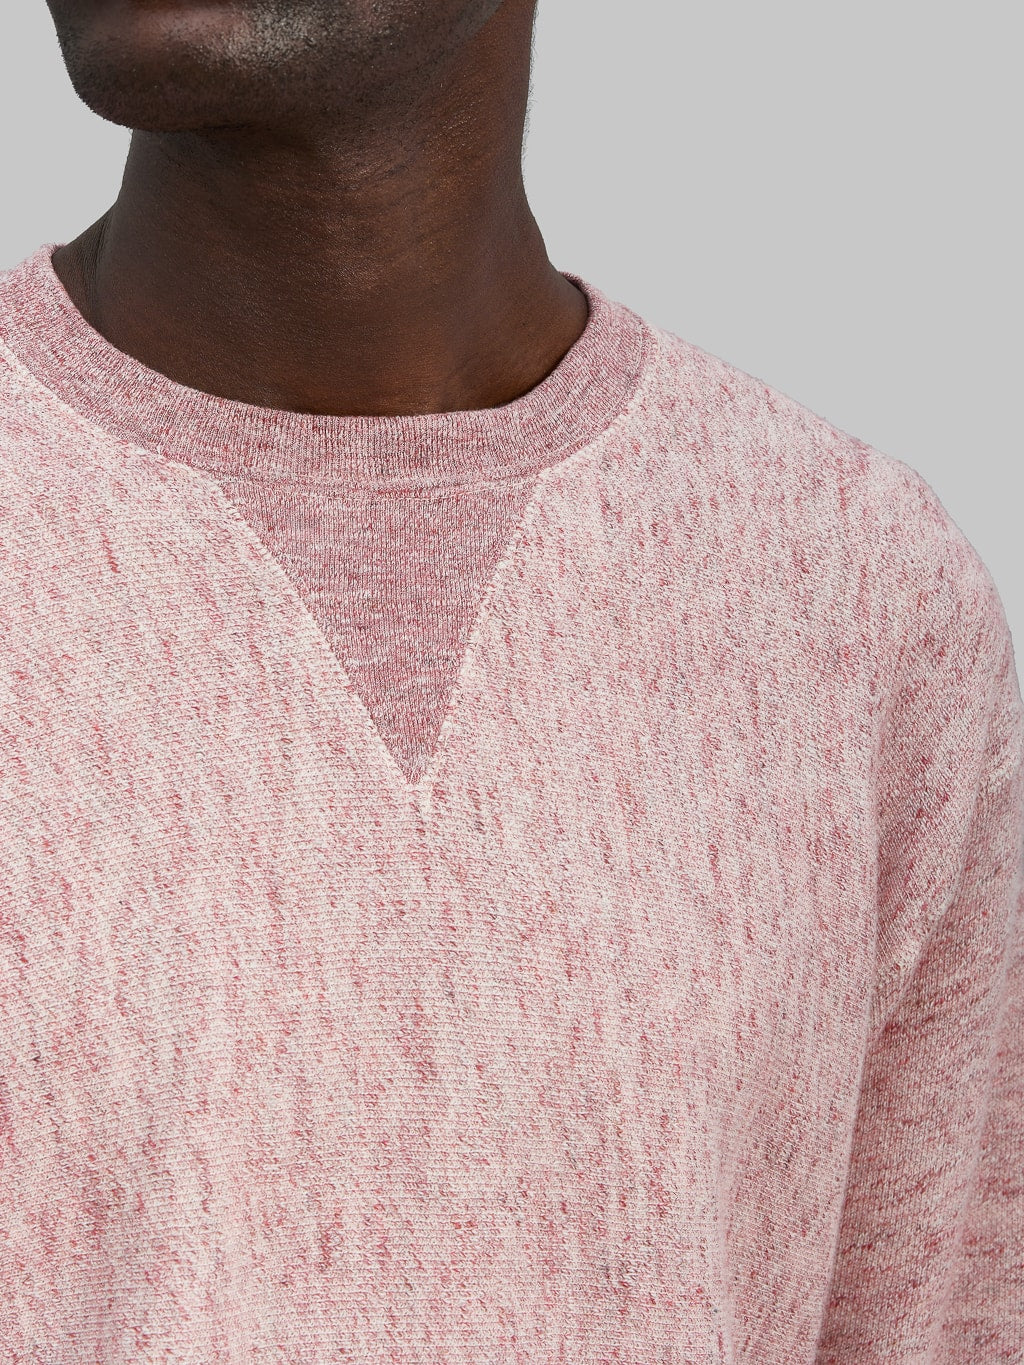 loop and weft big loopback fleece side panel sweatshirt cherry v neck